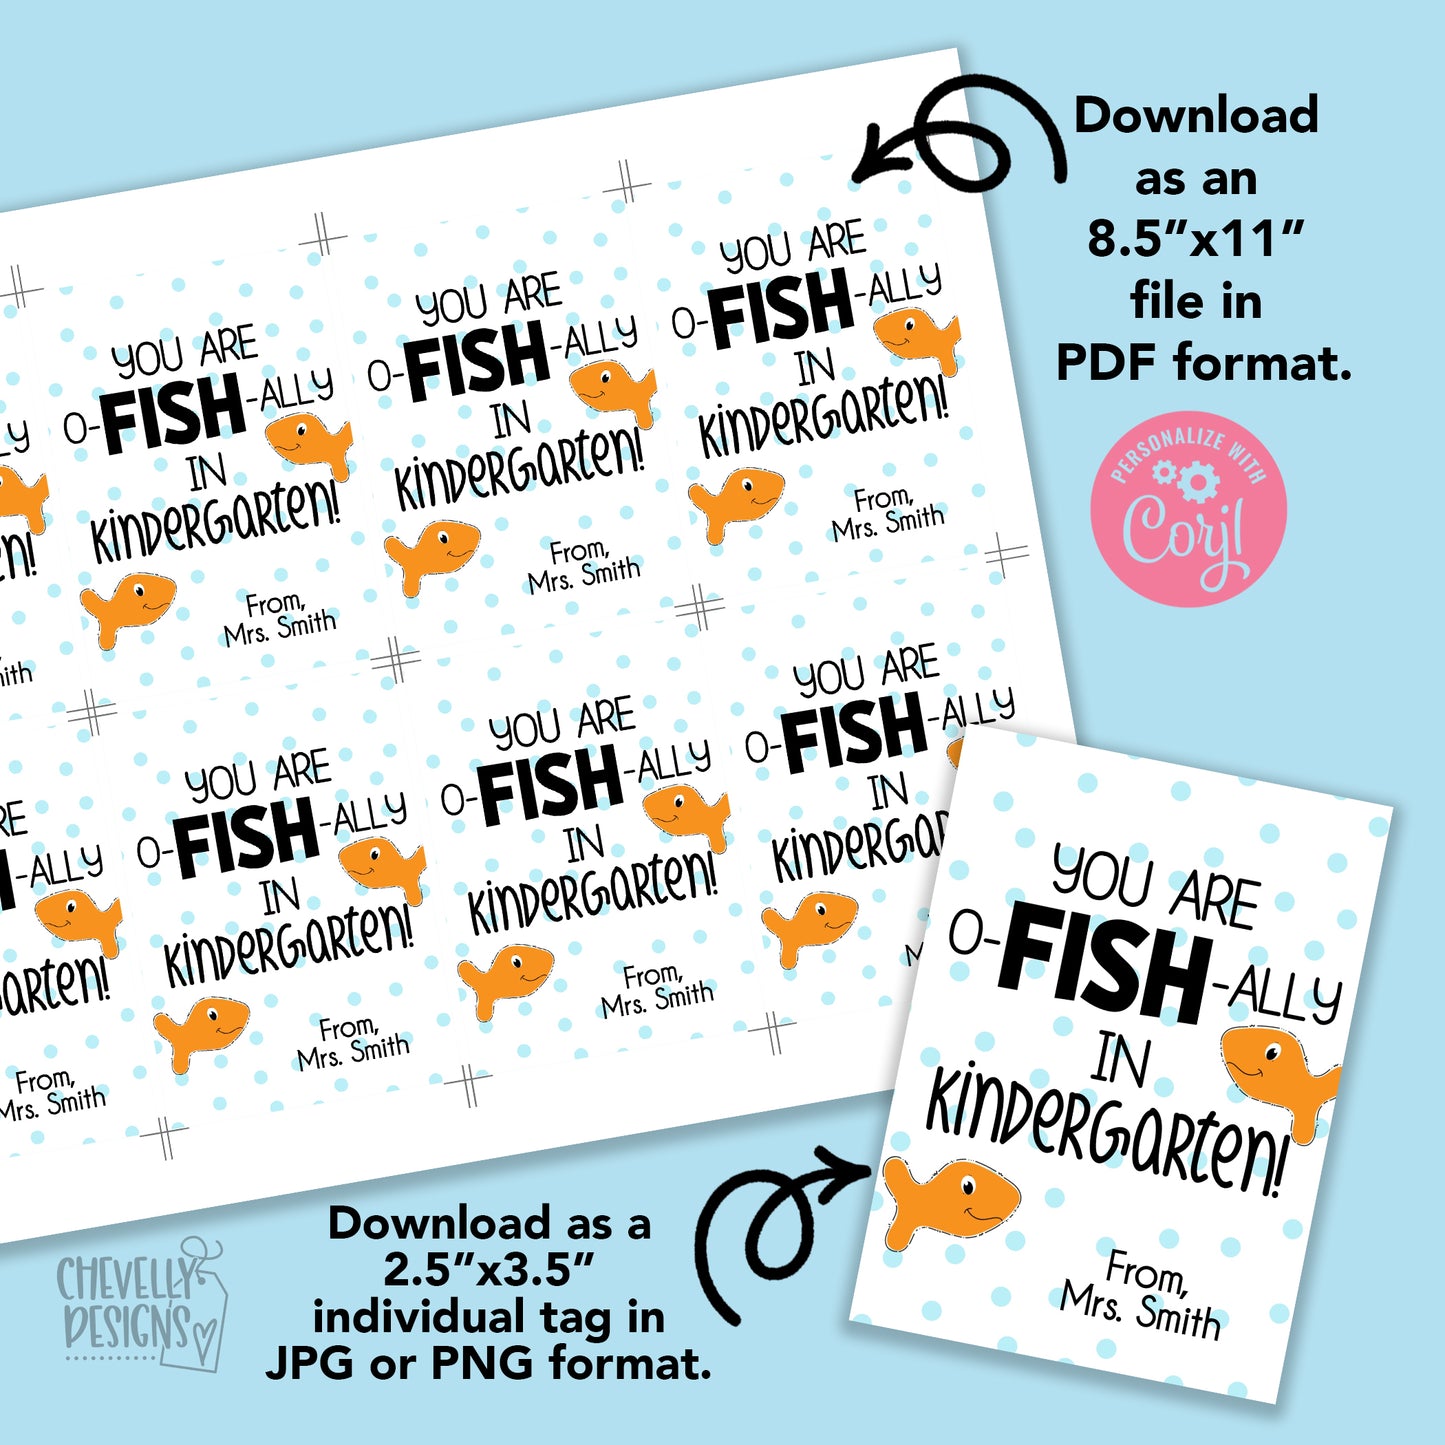 Editable - You Are o-FISH-ally in Kindergarten - Printable - Digital File